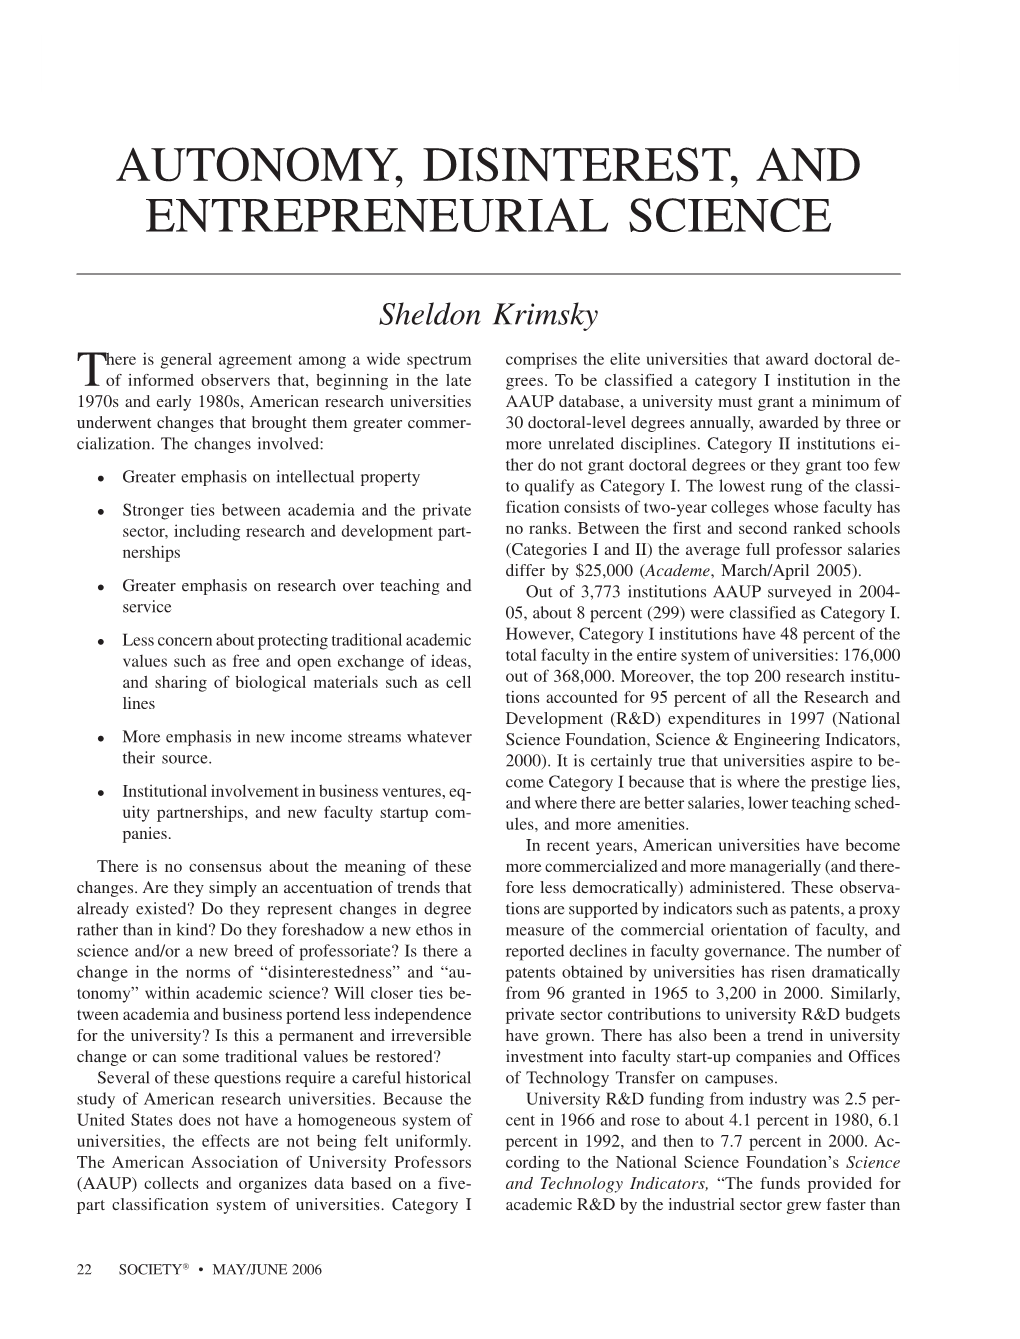 Autonomy, Disinterest, and Entrepreneurial Science